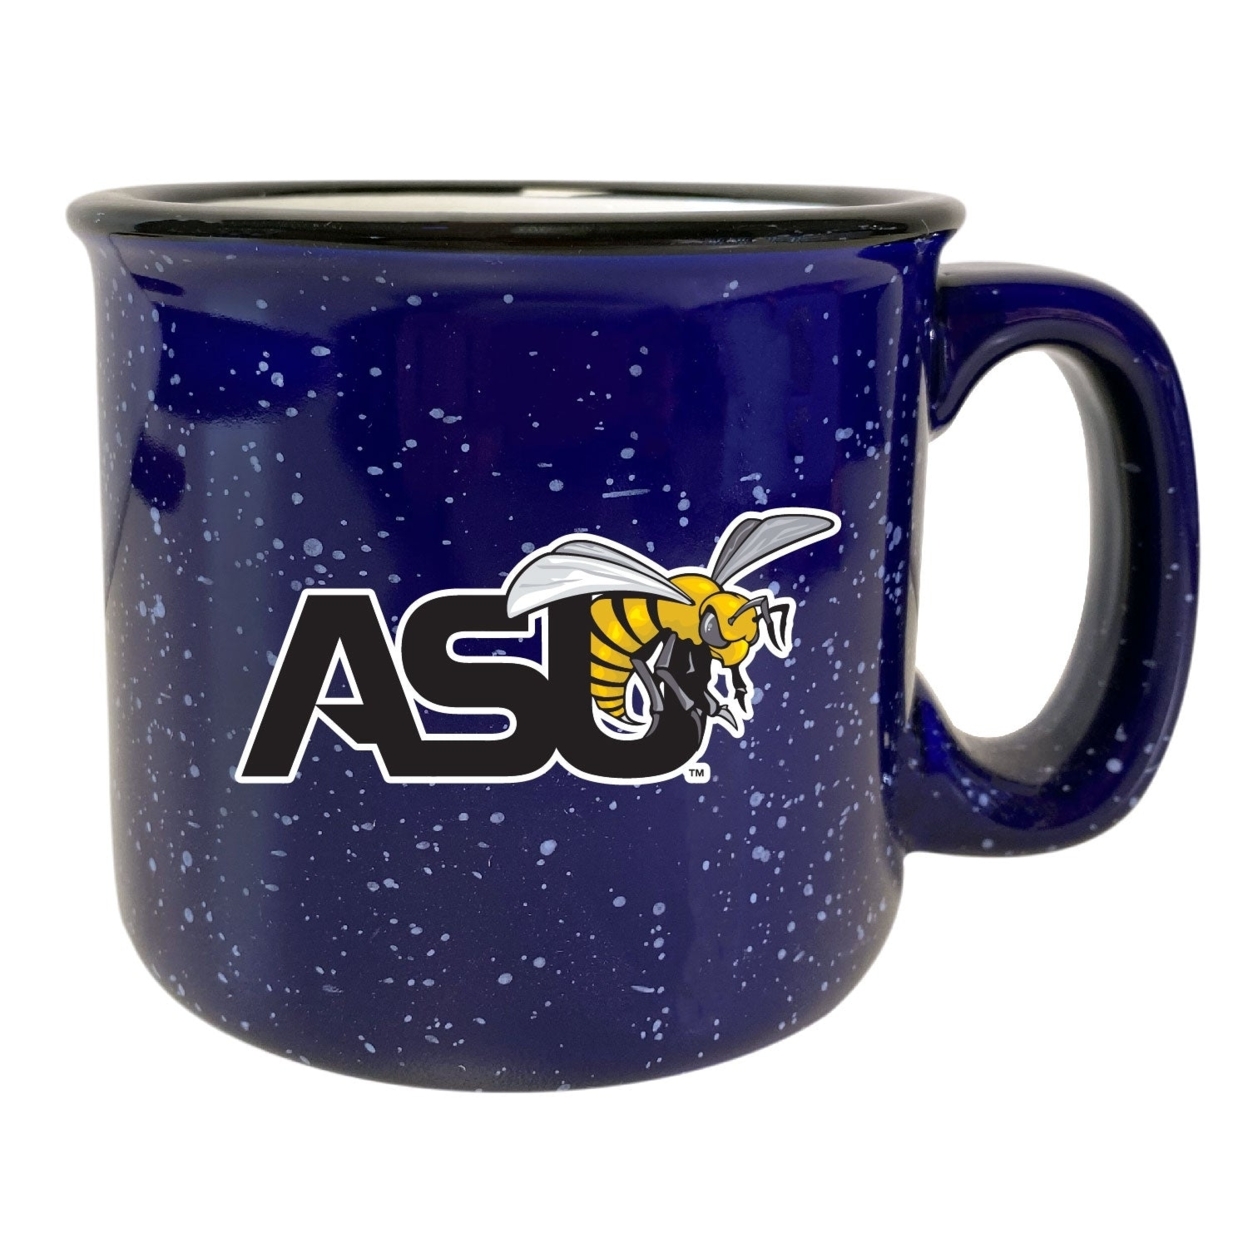 Alabama State University Speckled Ceramic Camper Coffee Mug - Choose Your Color - White